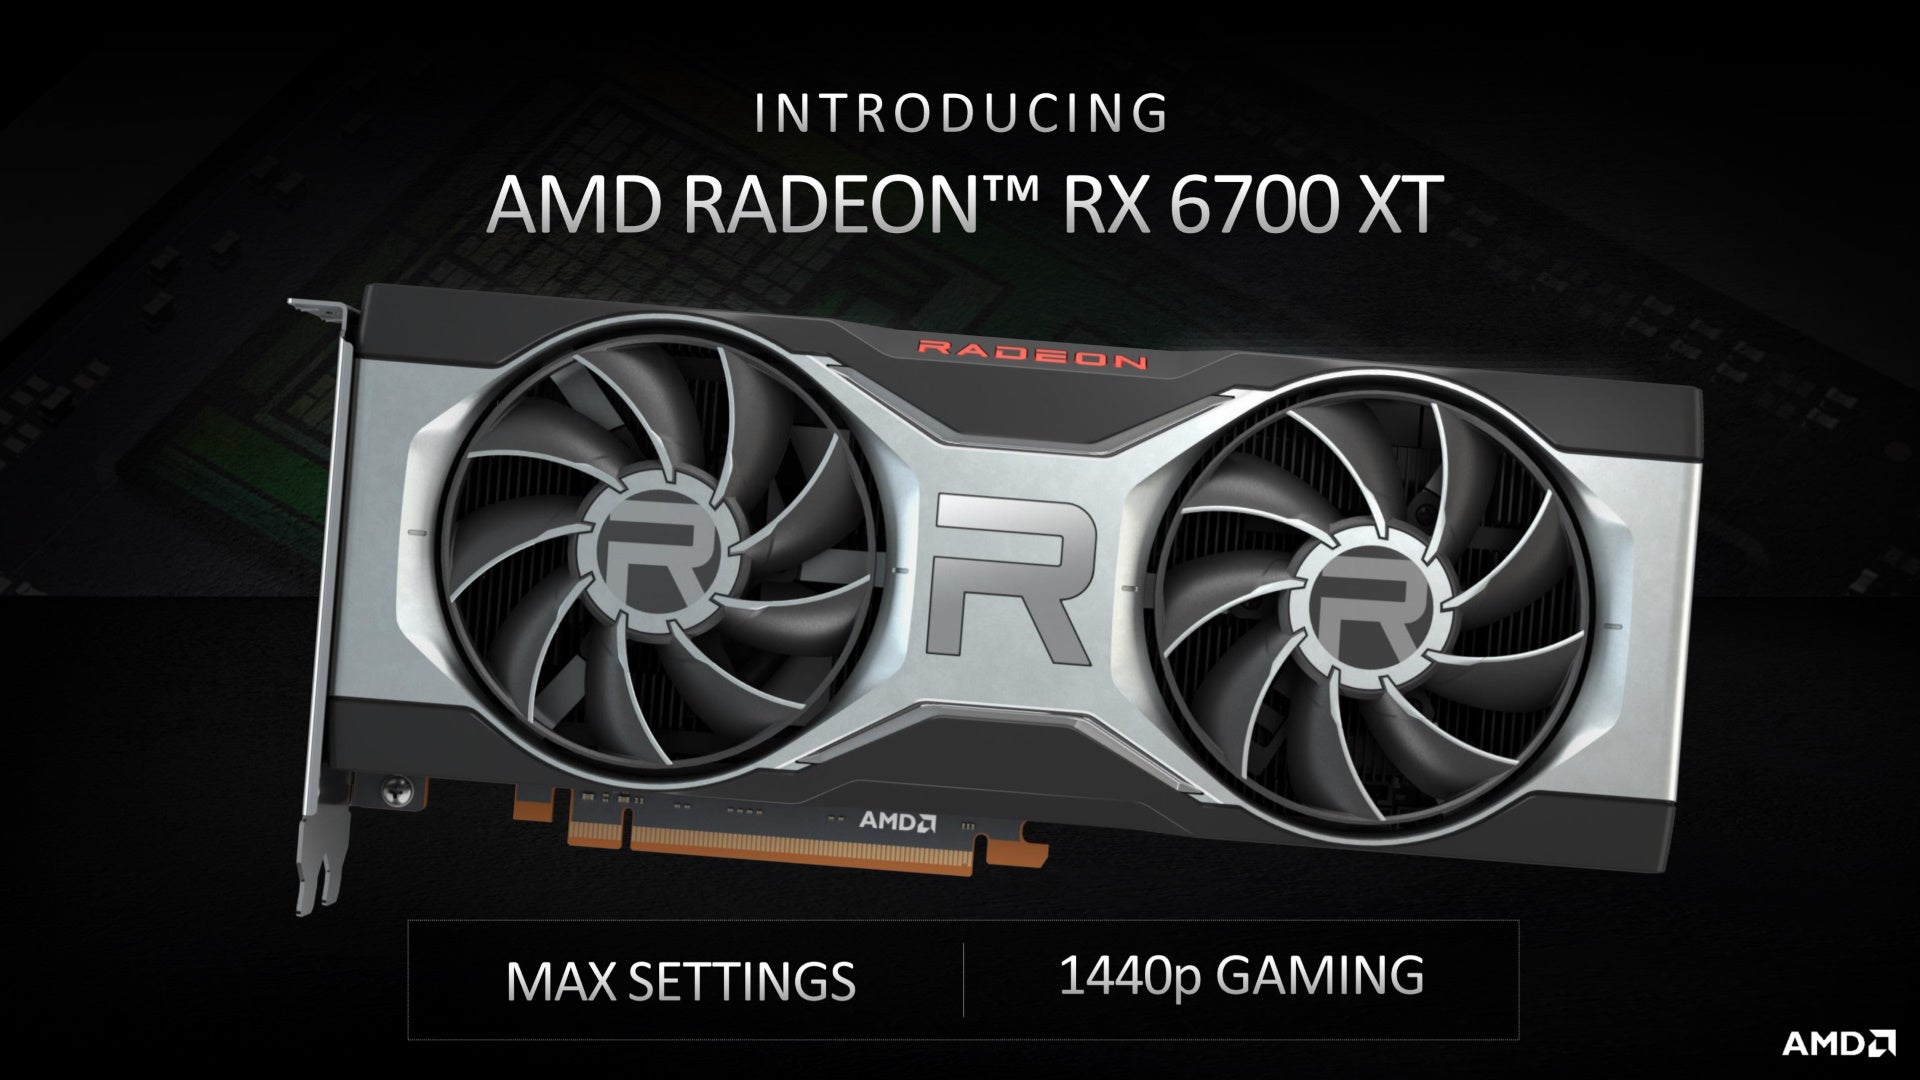 AMD's Radeon RX 6700 XT graphics card